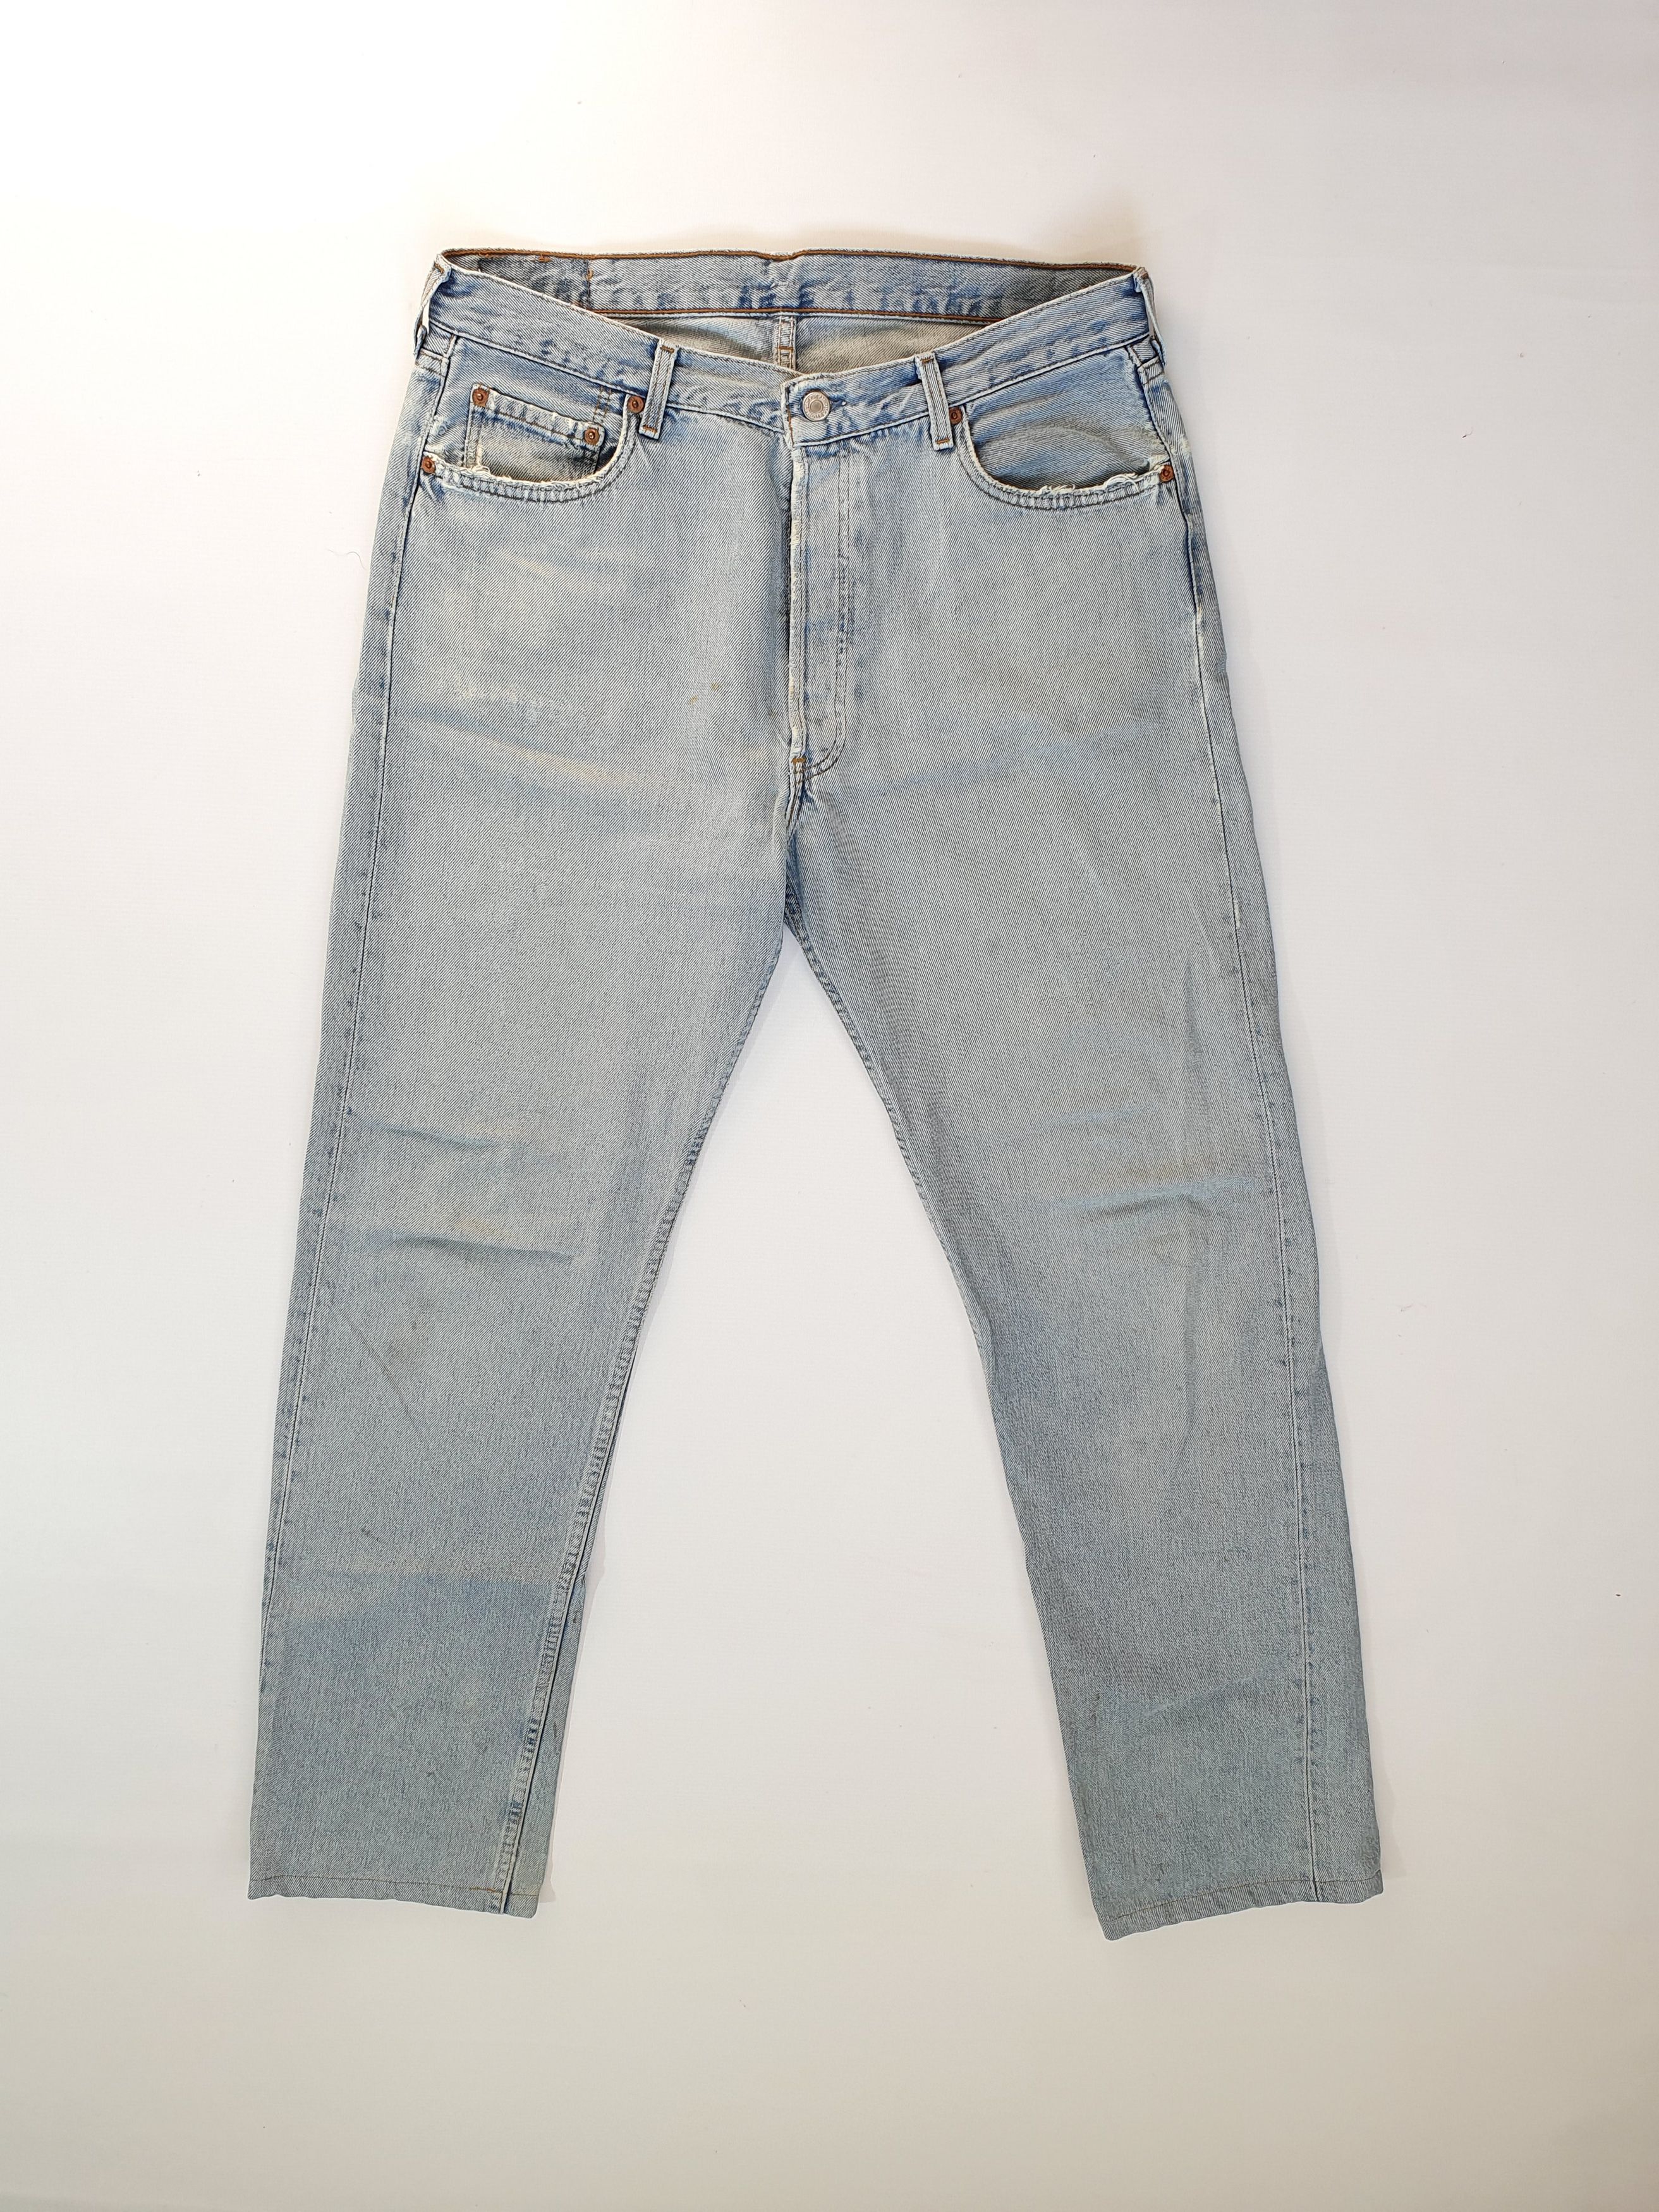 Vintage 1994 Vintage LEVIS 501 Dirty Distressed Jeans Size US 33 - 17 Preview